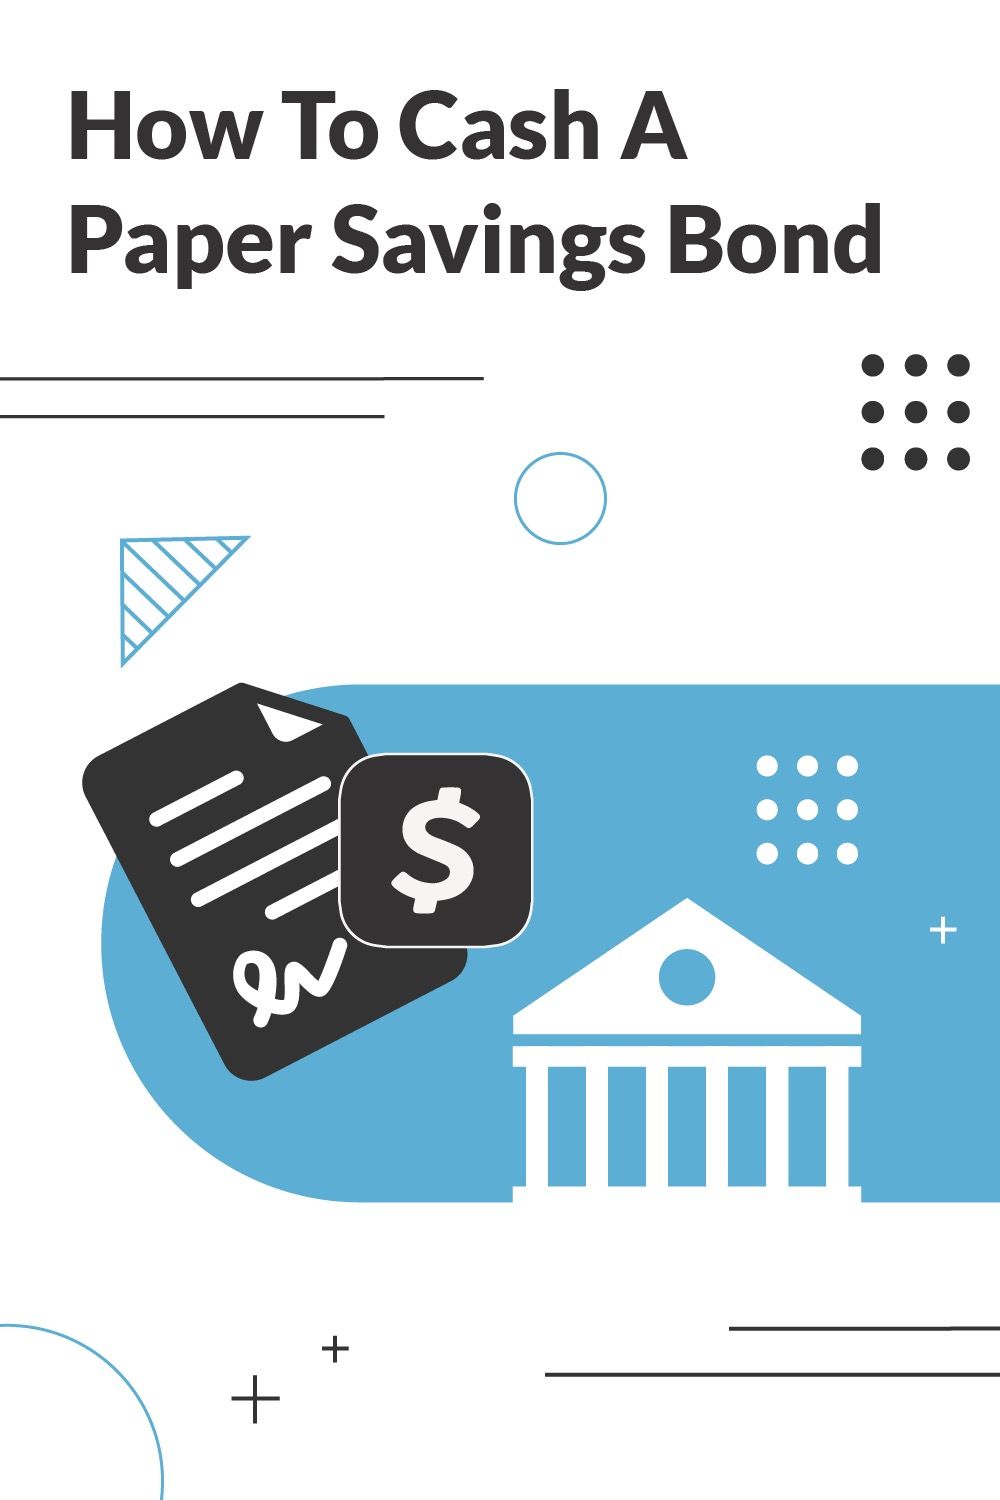 how to cash a paper savings bond pinterest image